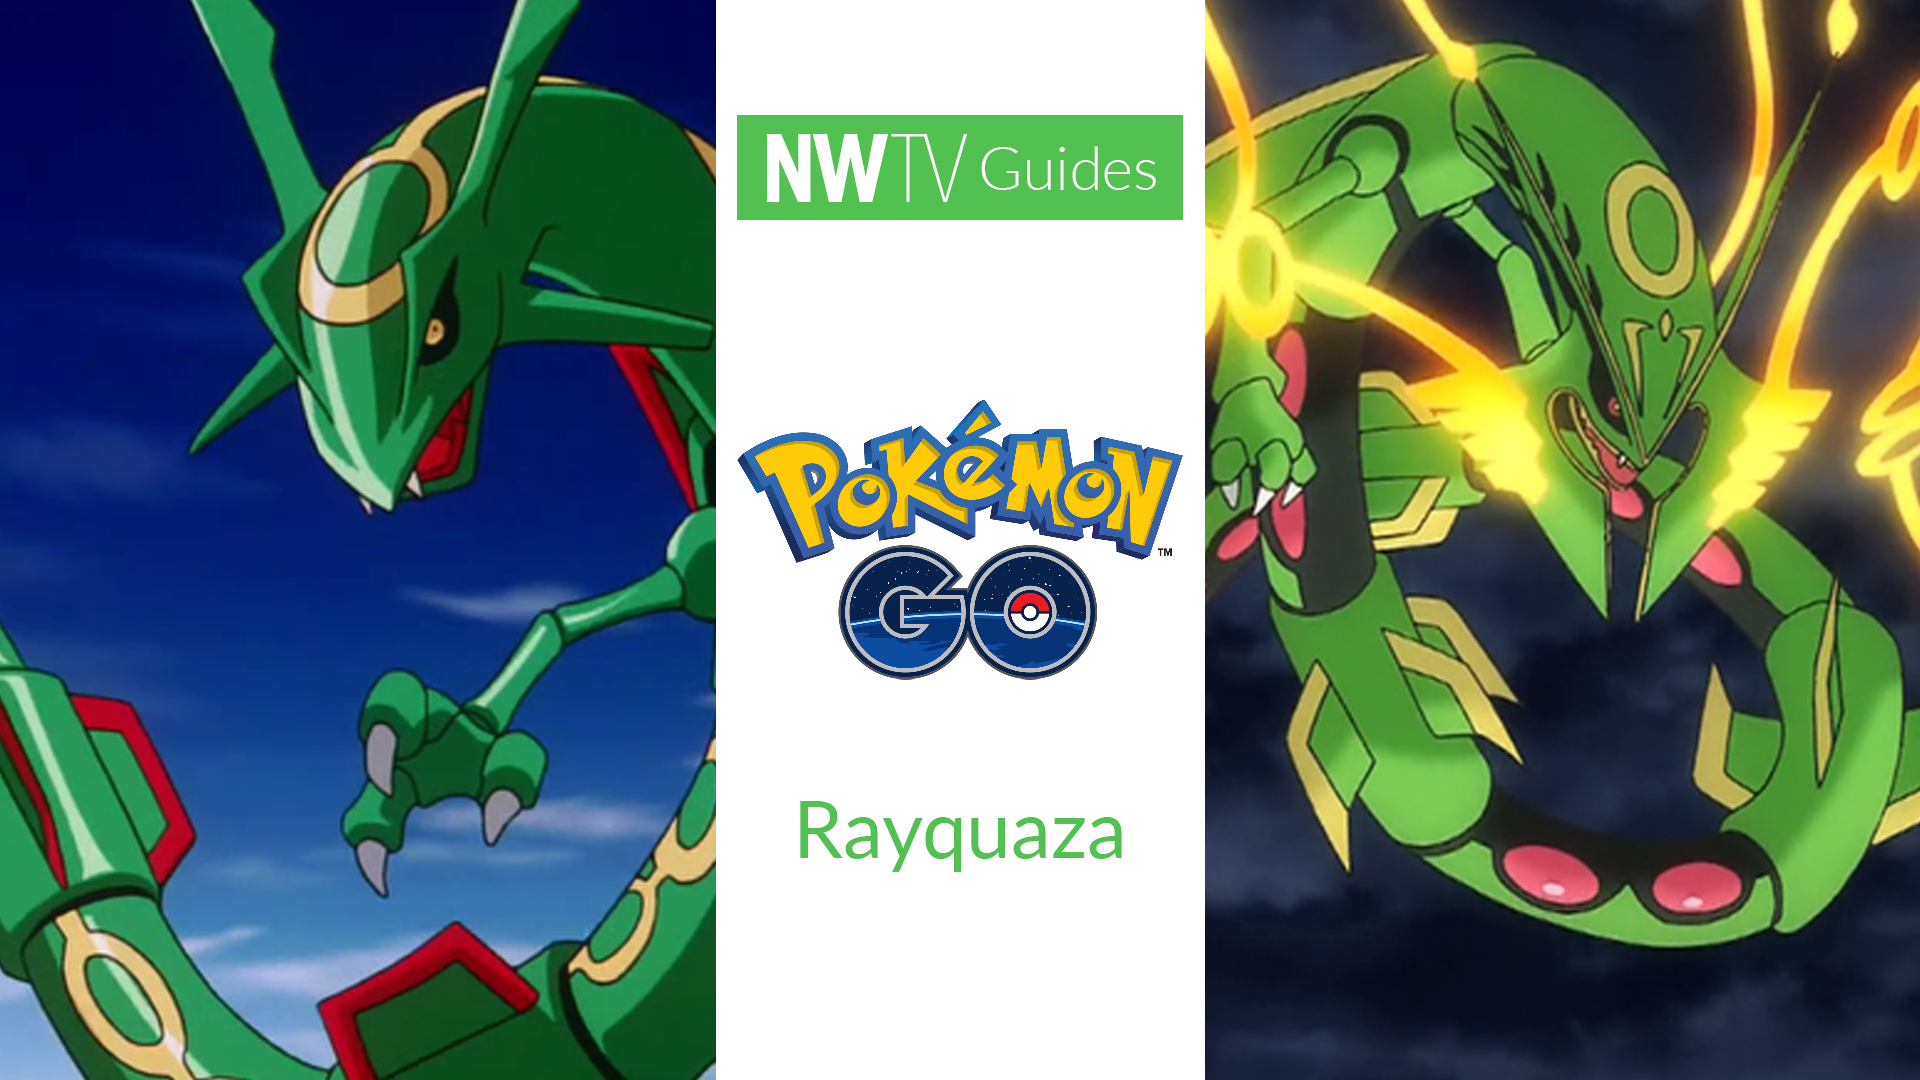 download rayquaza pokemon go for free